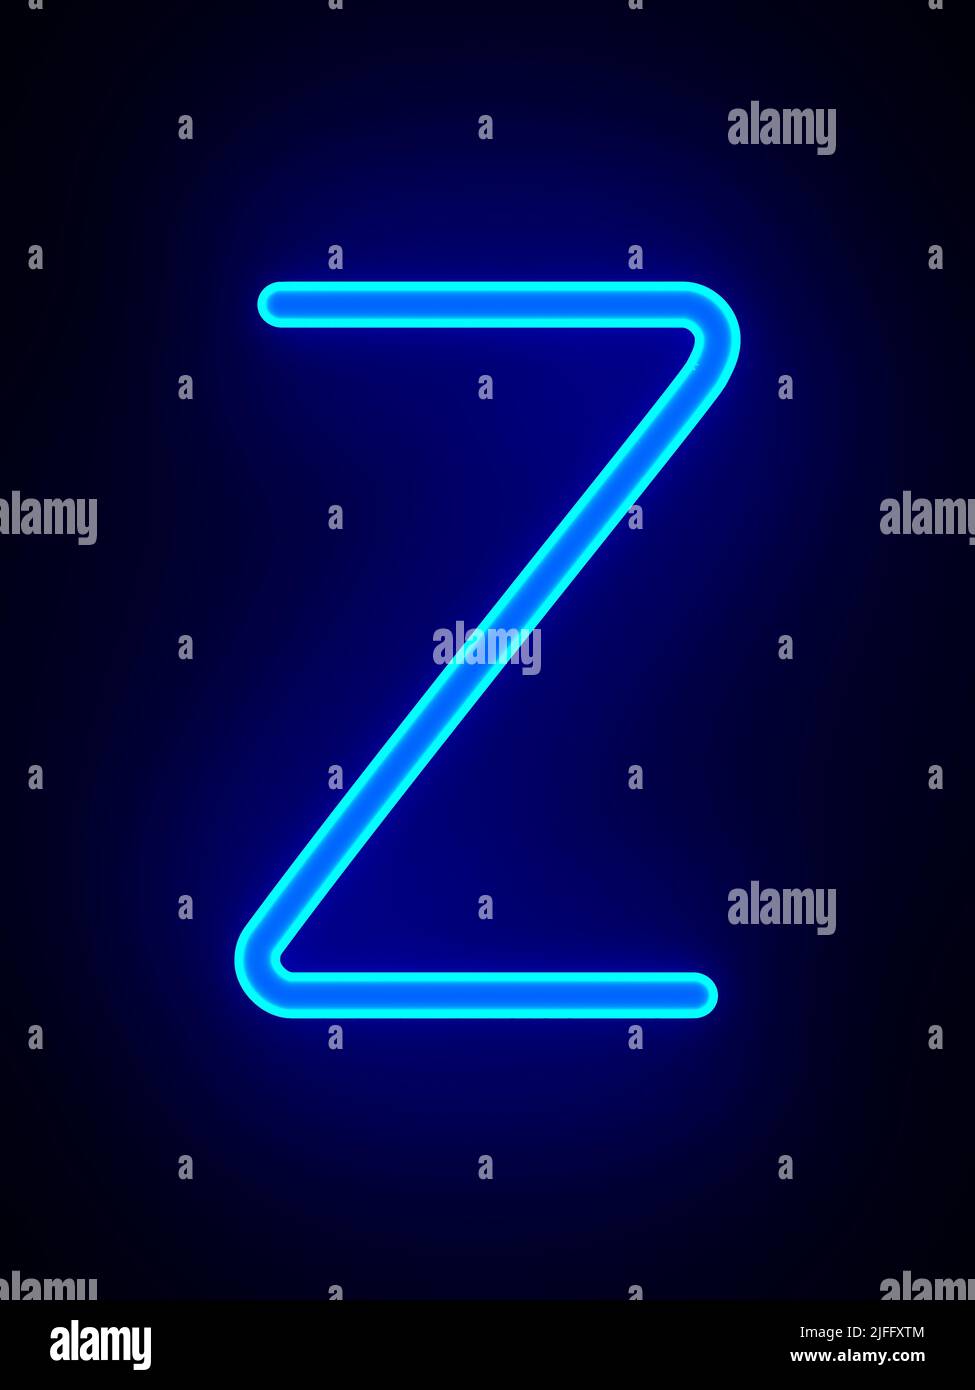 Character Z on dark background. 3D illustration Stock Photo